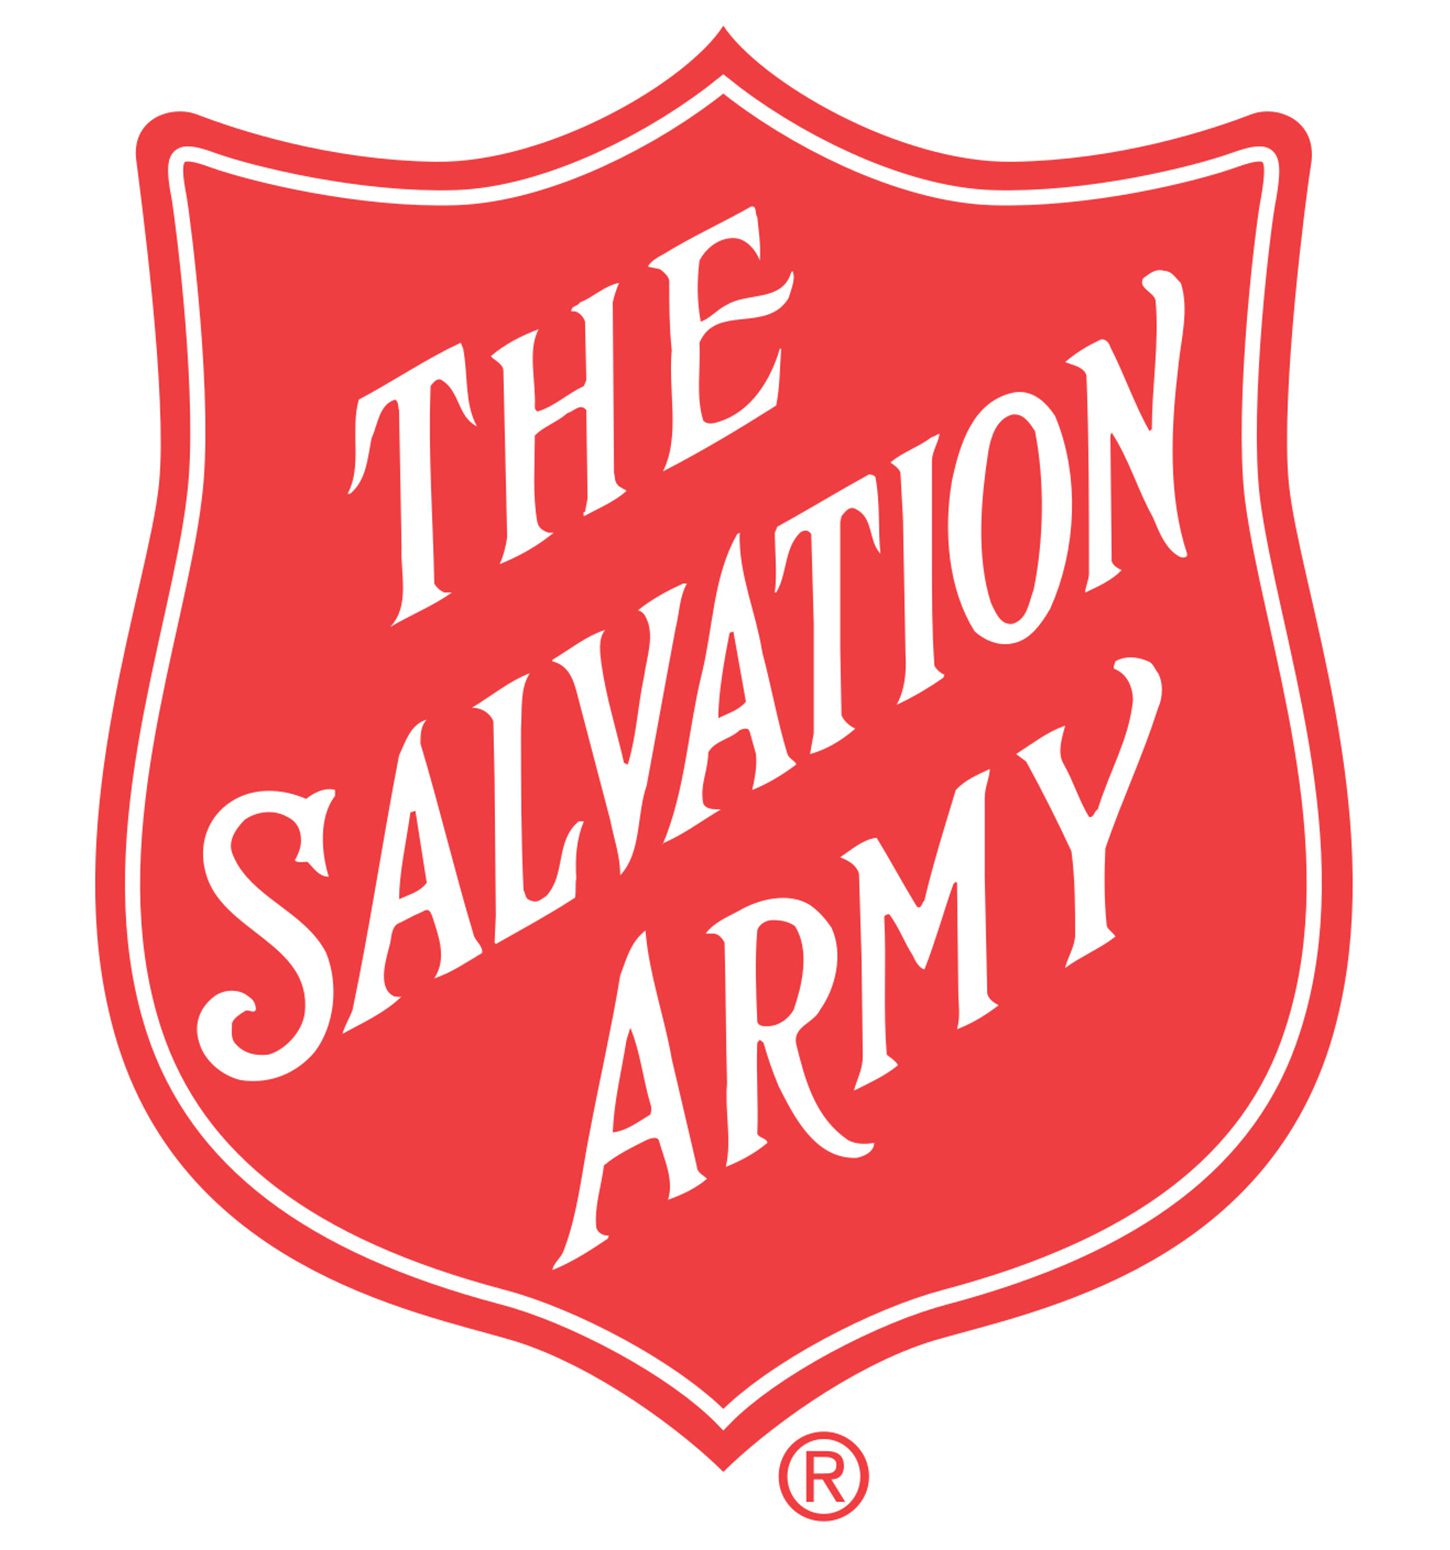 Salvation Army logo